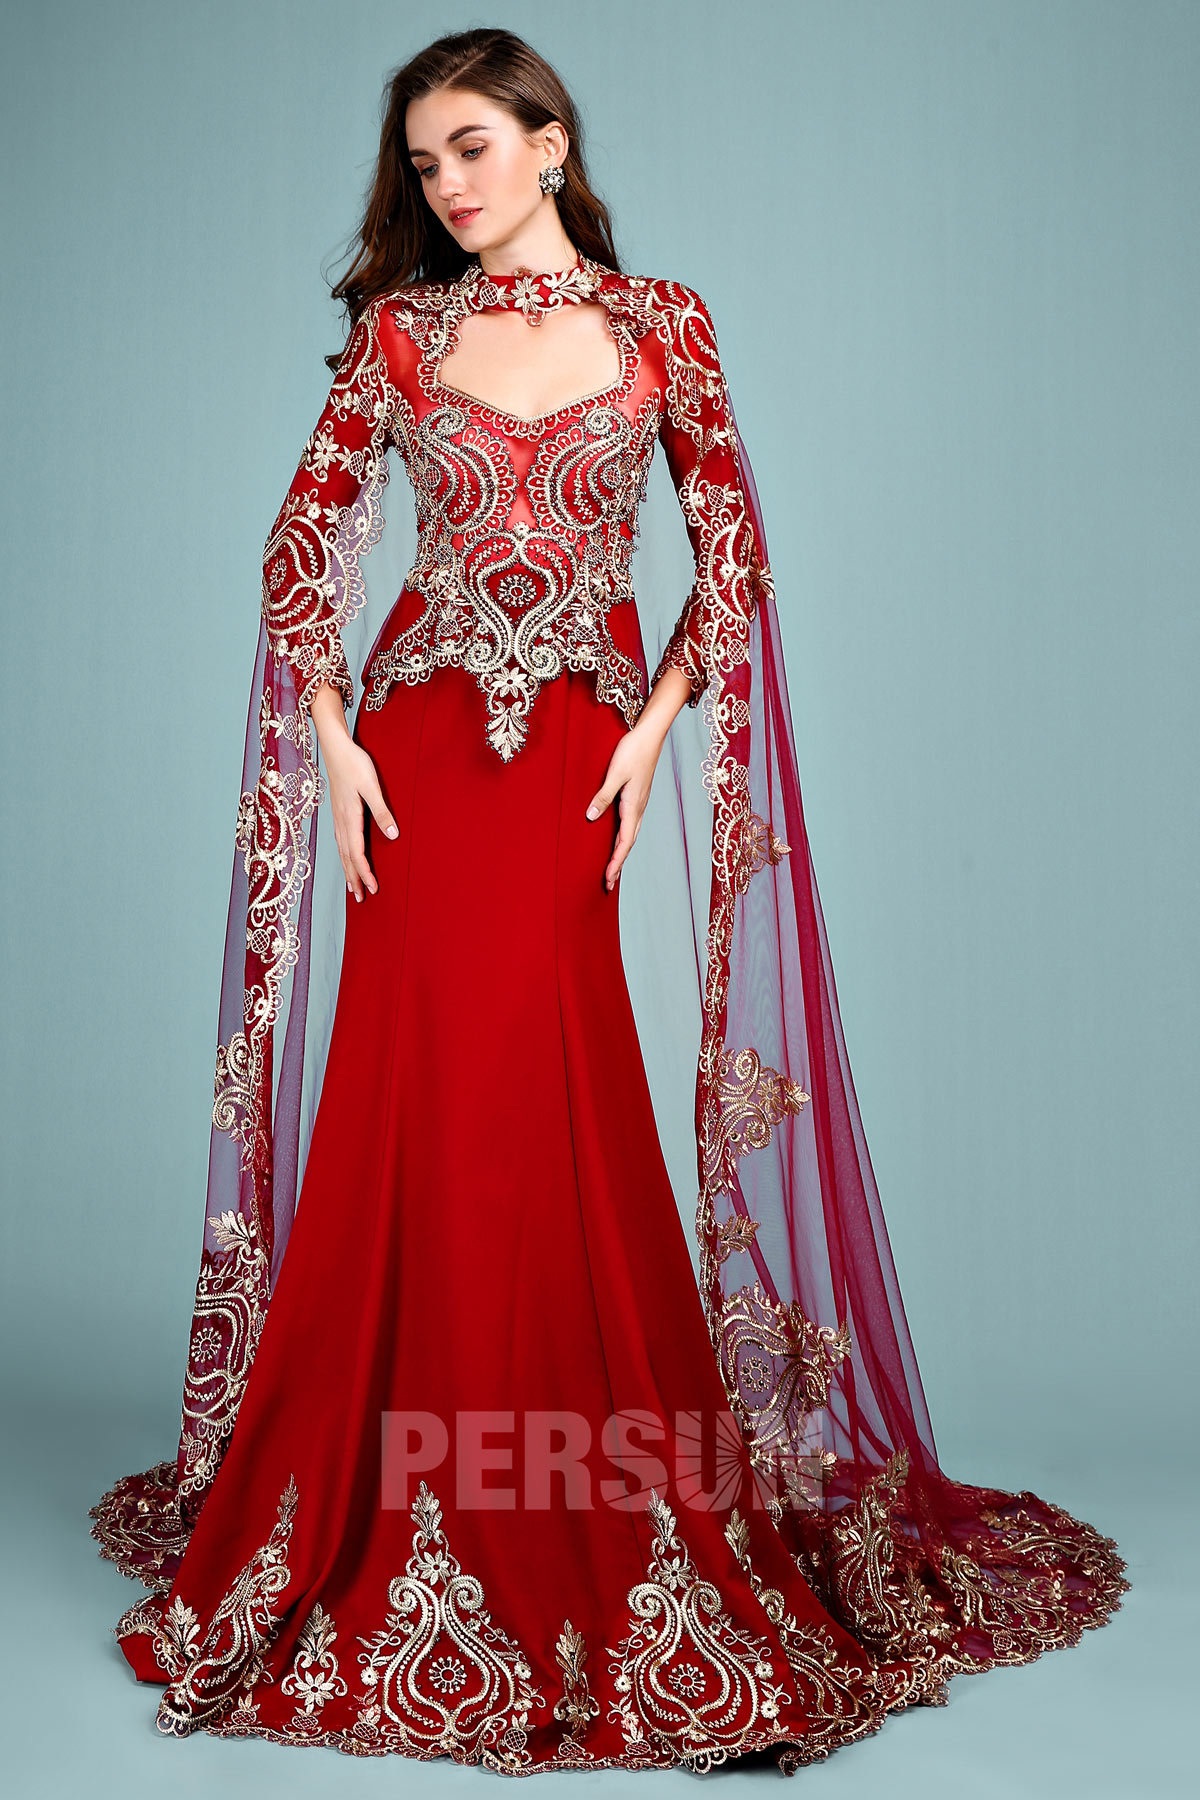 robe-de-mariee-rouge-style-indien-anju-persun-2019.jpg?profile=RESIZE_584x